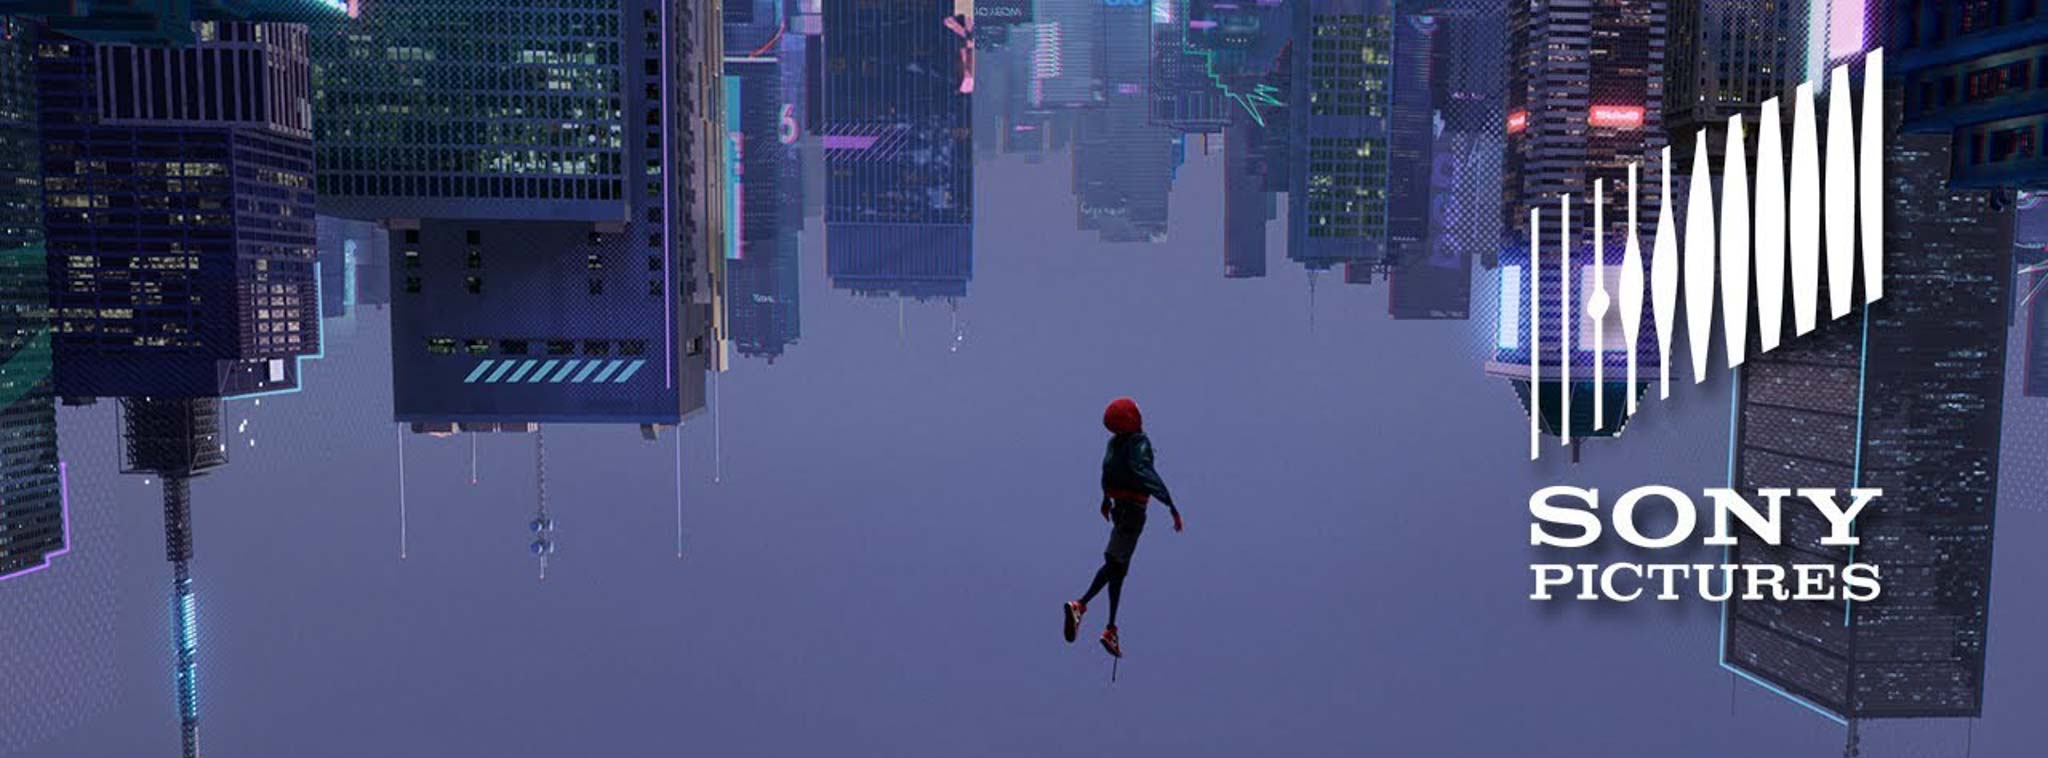 Mời xem trailer phim Spider-Man: Into the Spider-verse - Nhóc nhện gốc Phi